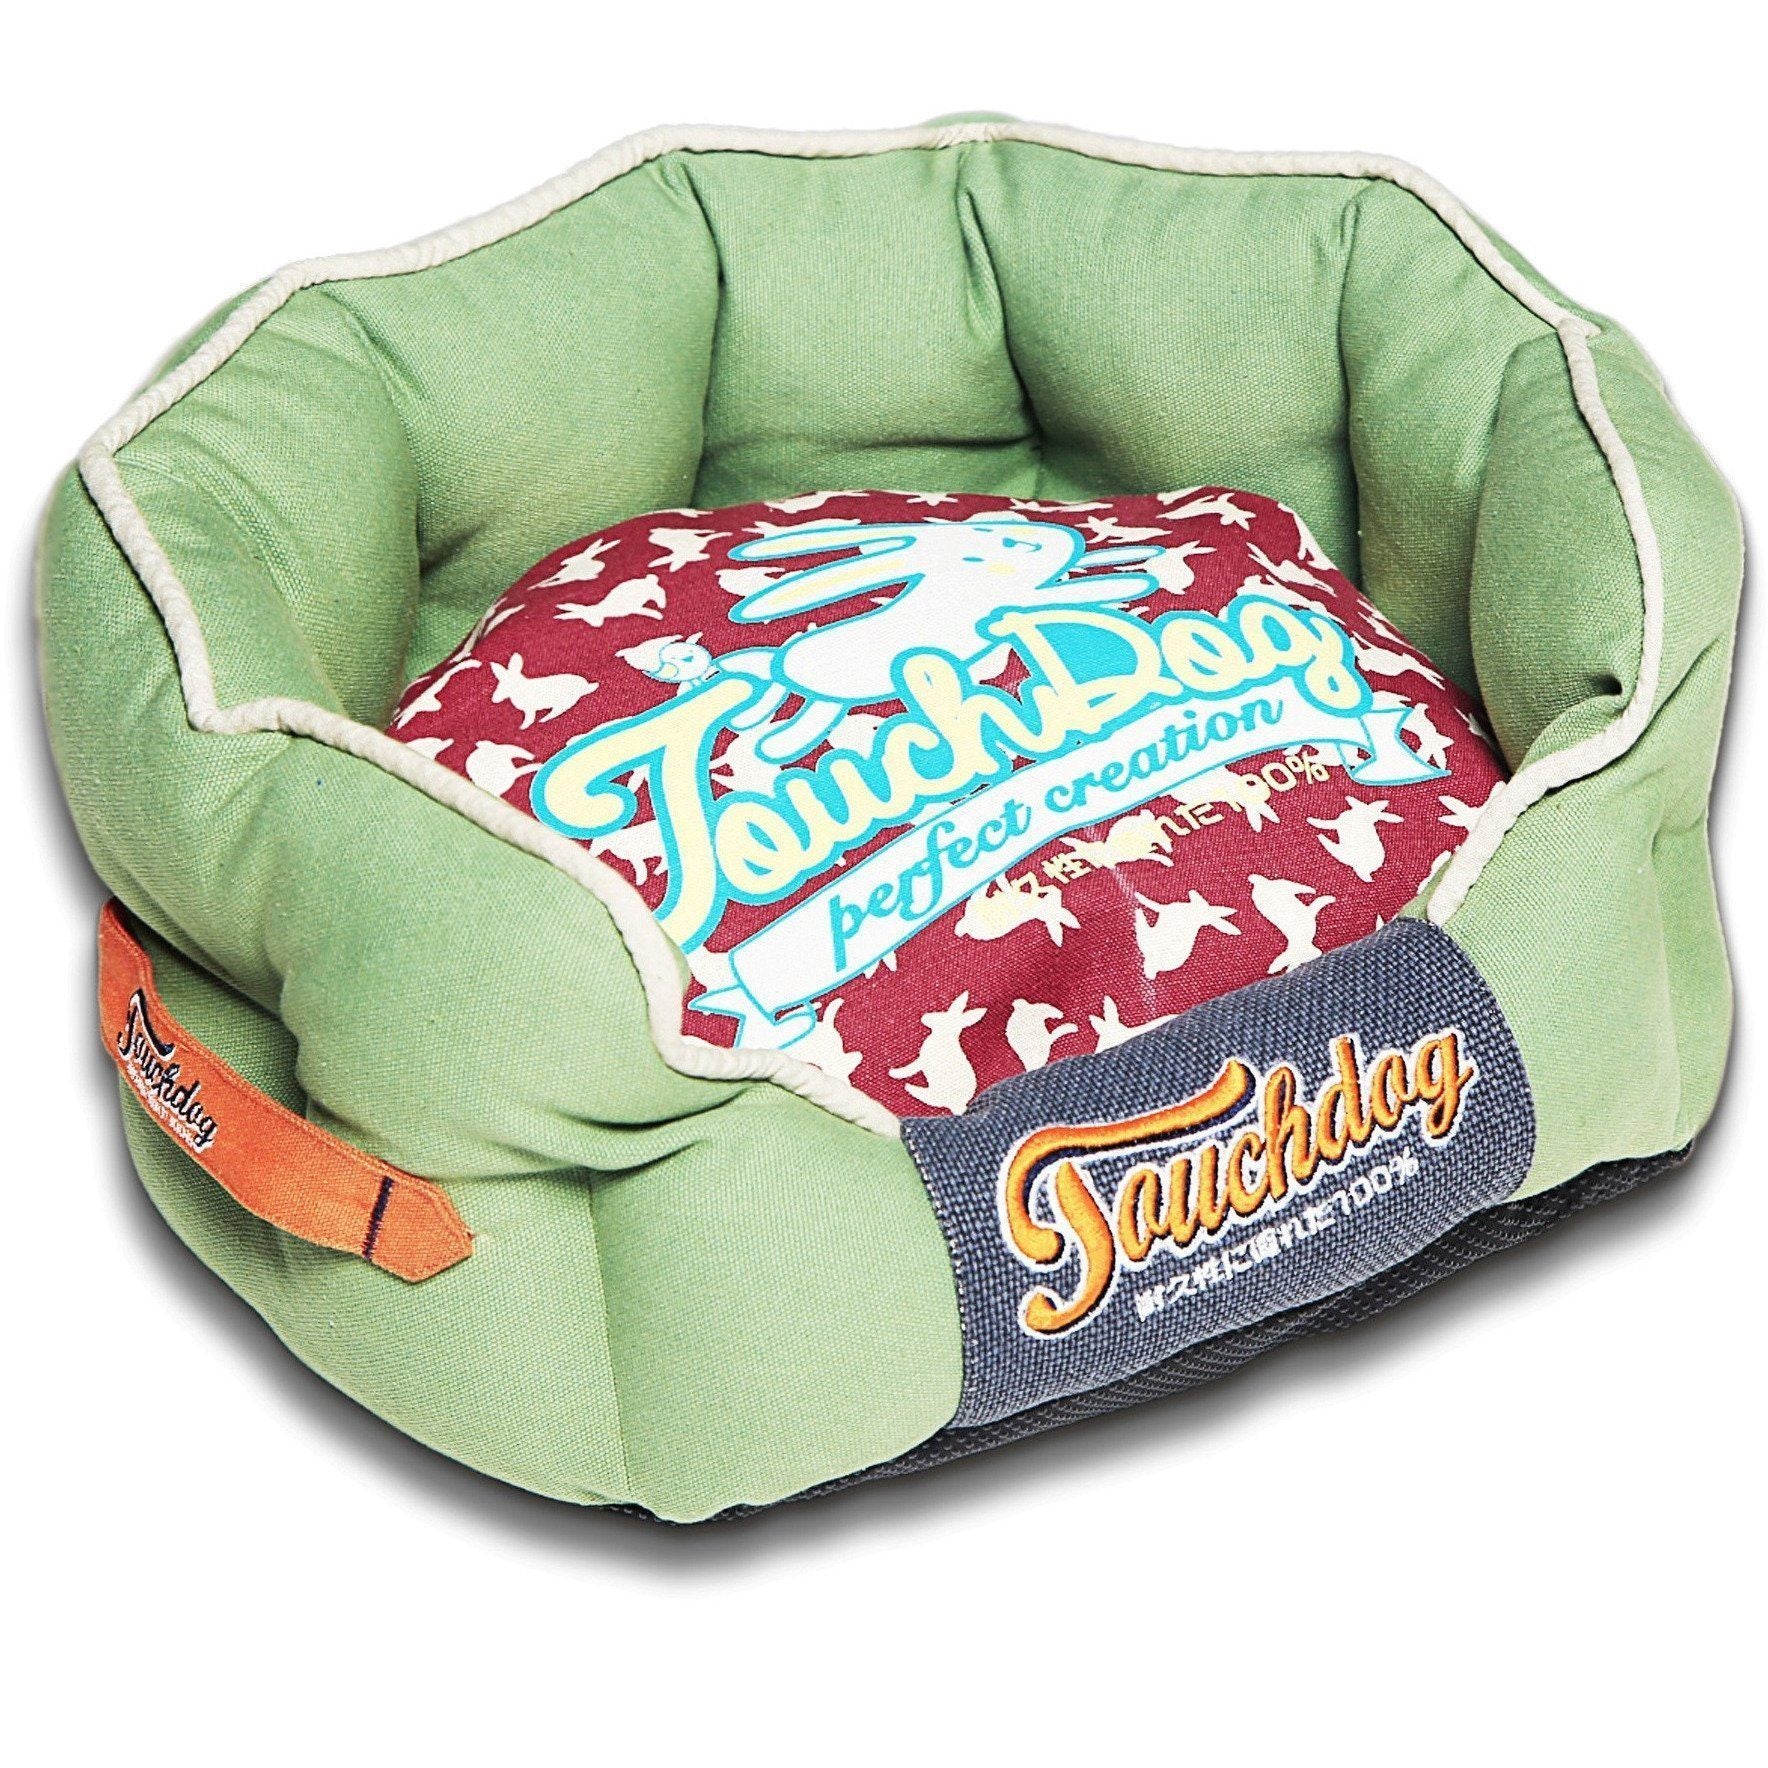 Touchdog ® 'Lazy-Bones' Rabbit-Spotted Rounded Designer Dog Bed Medium Olive Green, Champaign Red